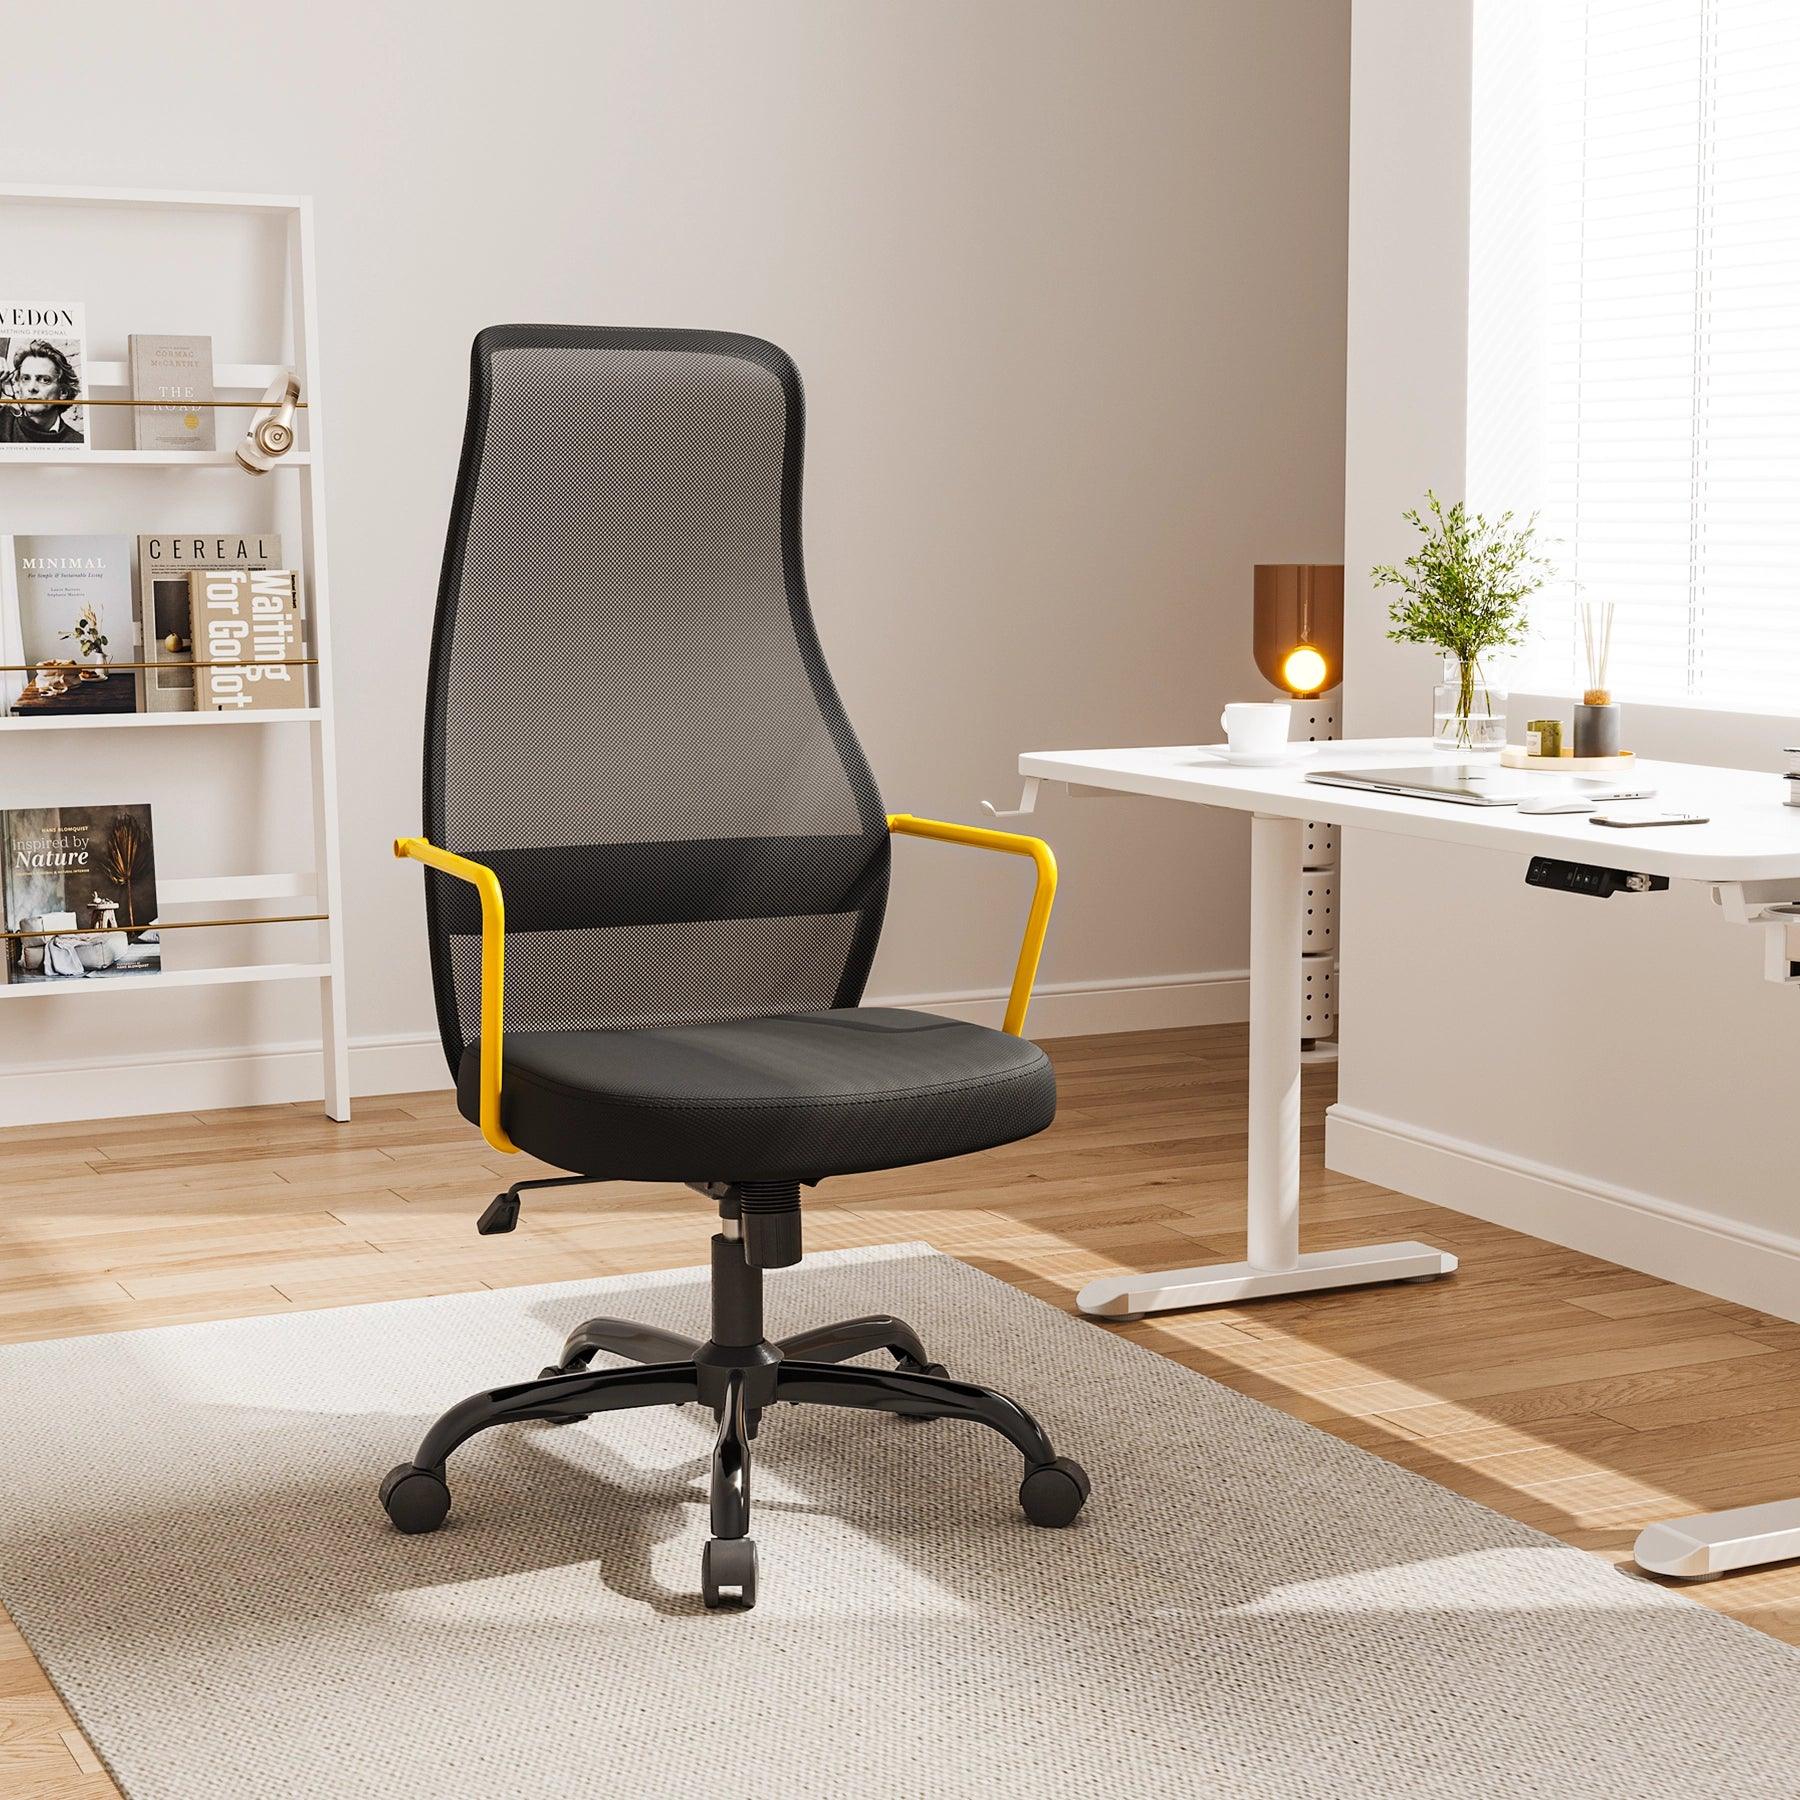 Sihoo M90D Ergonomic Office Chair Review